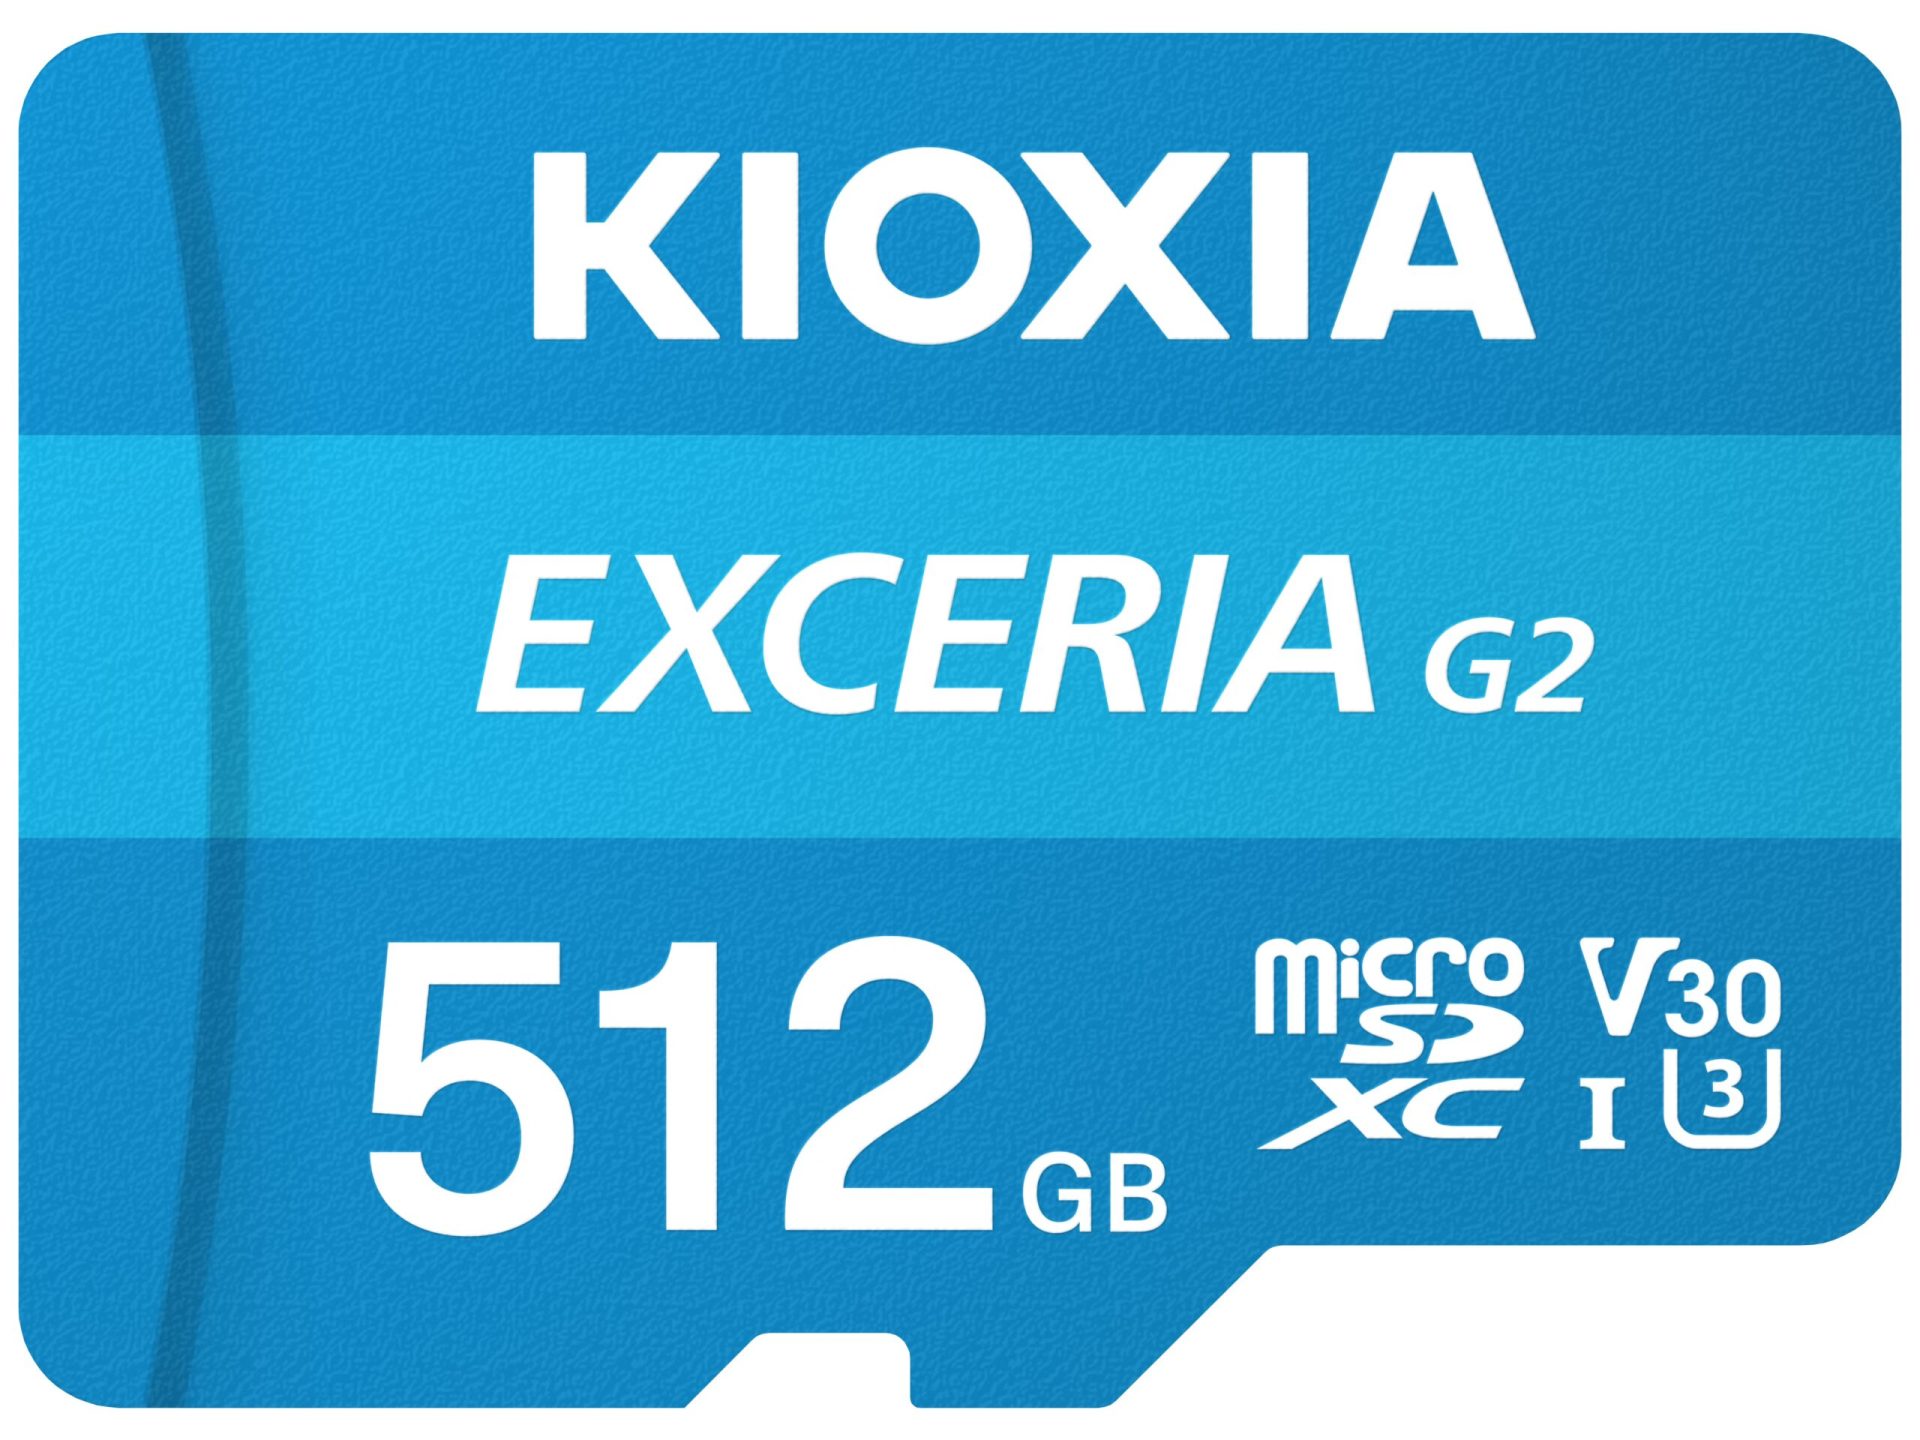 EXCERIA G2 microSD Speicherkarten